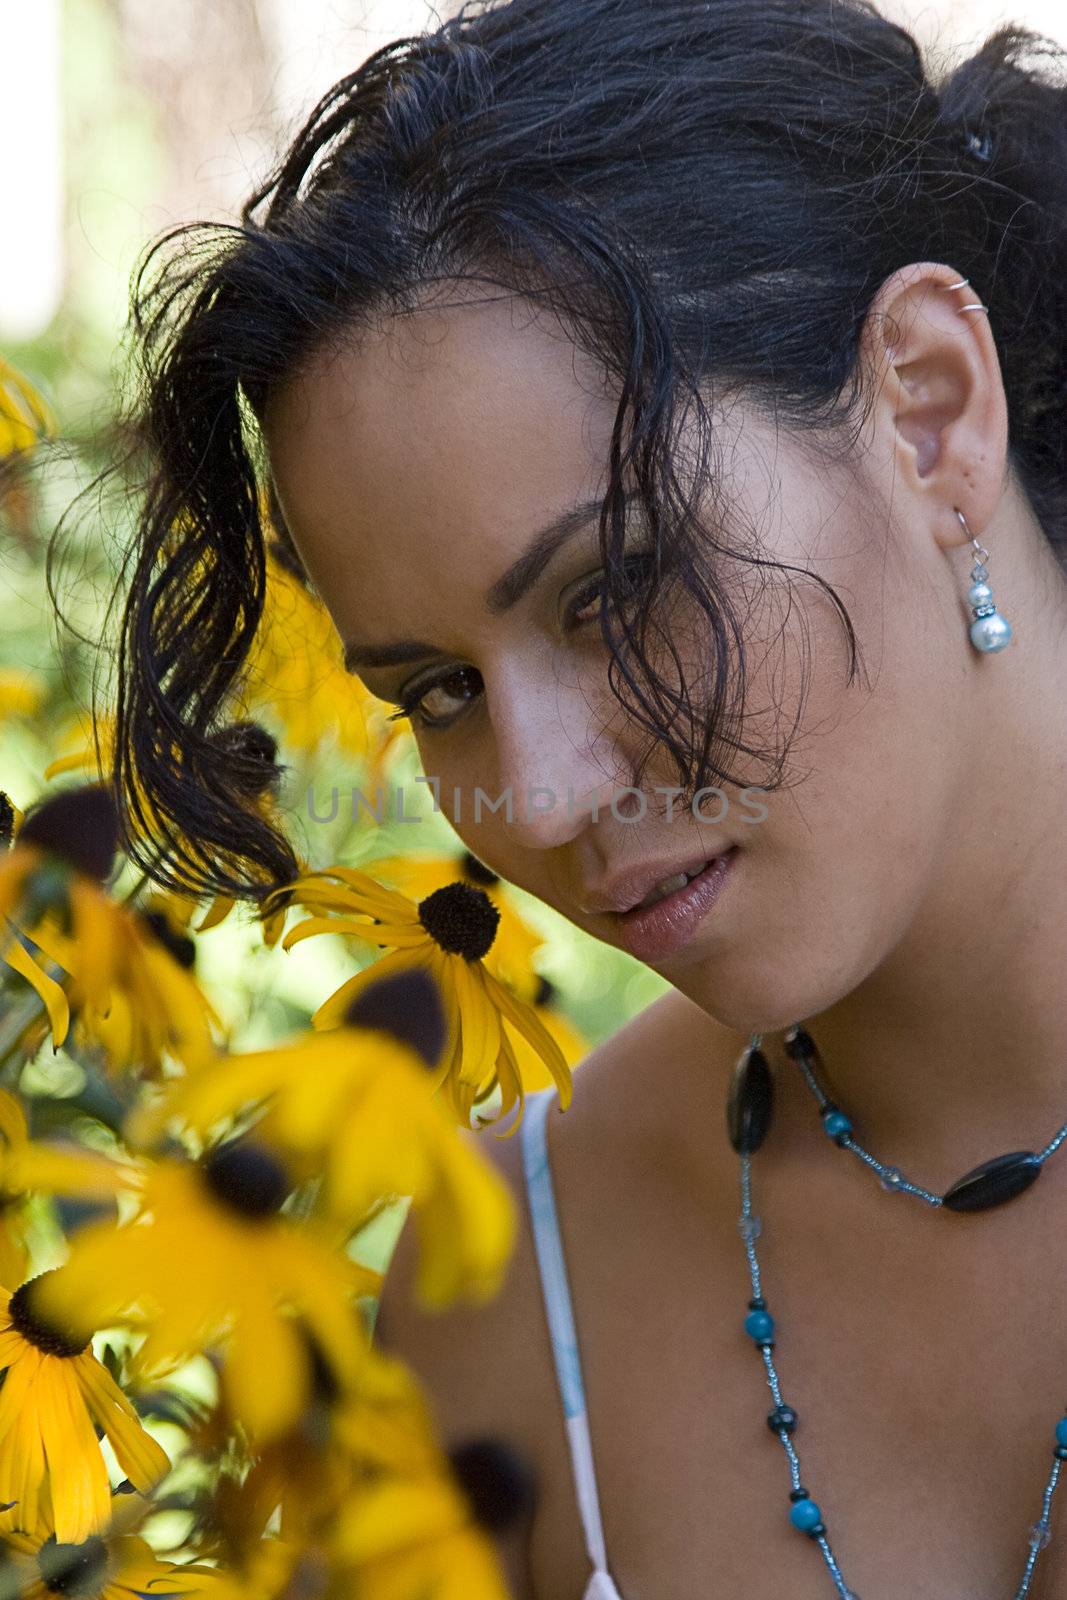 Twenty something columbian women smelling daisies in a garden